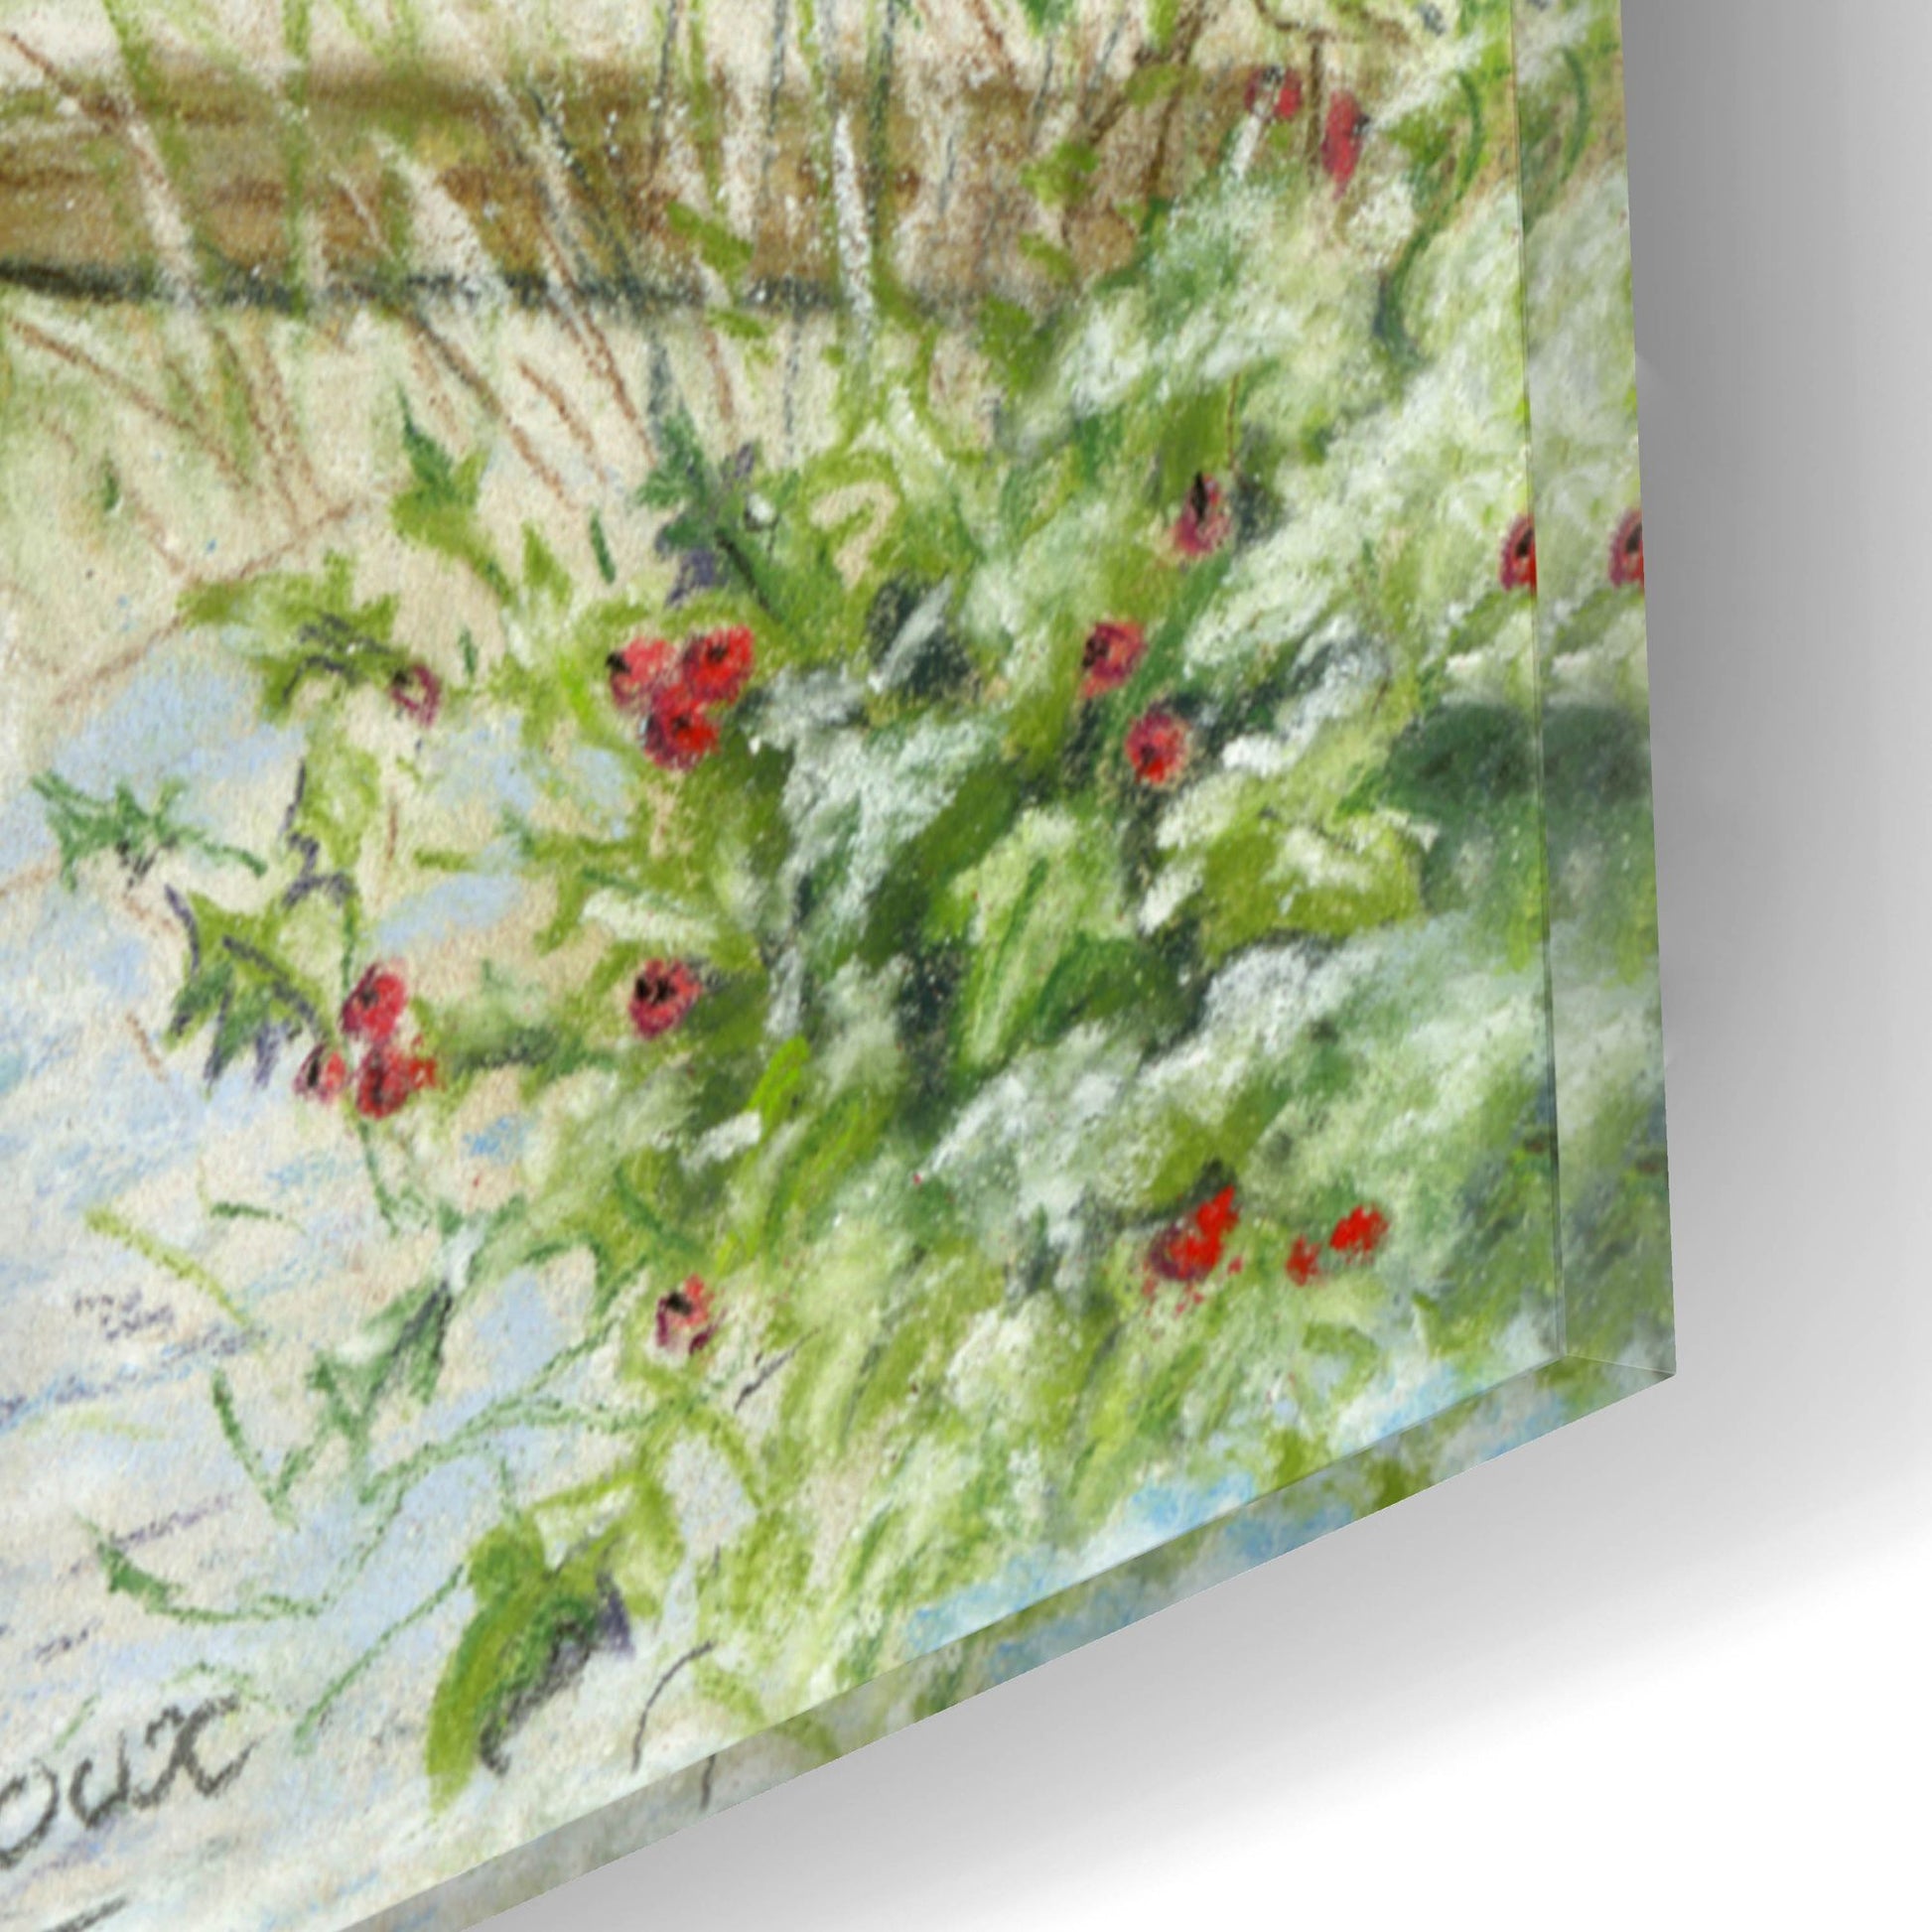 Epic Art 'Christmas Post Box' by Janet Pidoux, Acrylic Glass Wall Art,12x12